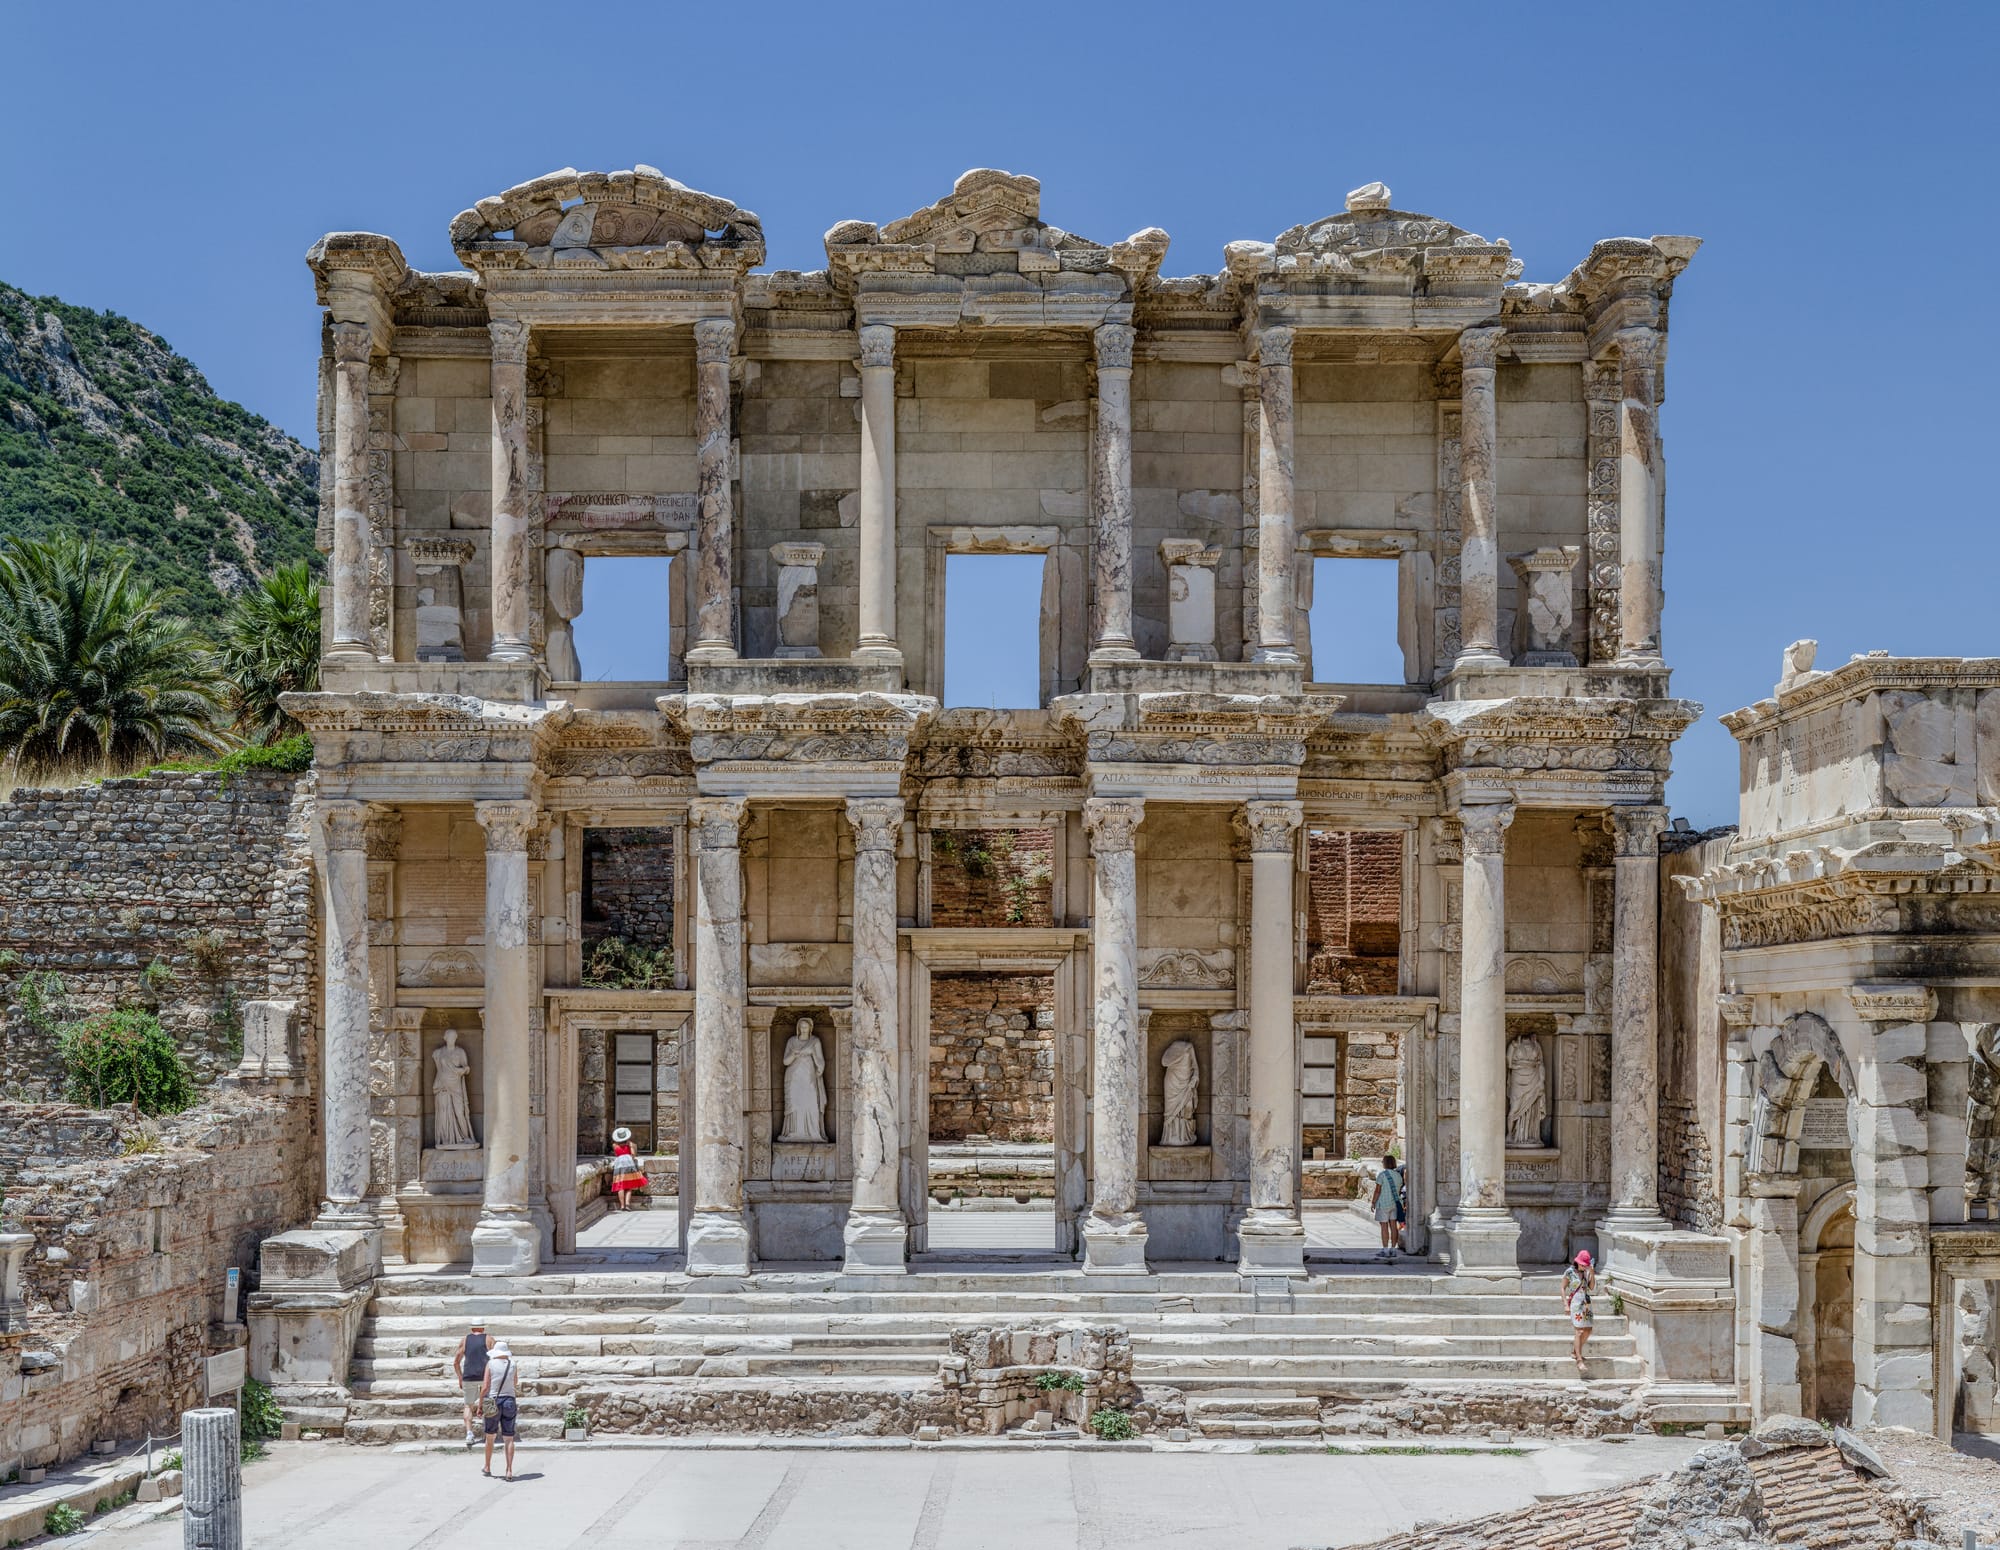 Façade of the Celsus library, in Ephesus, near Selçuk, west Turkey